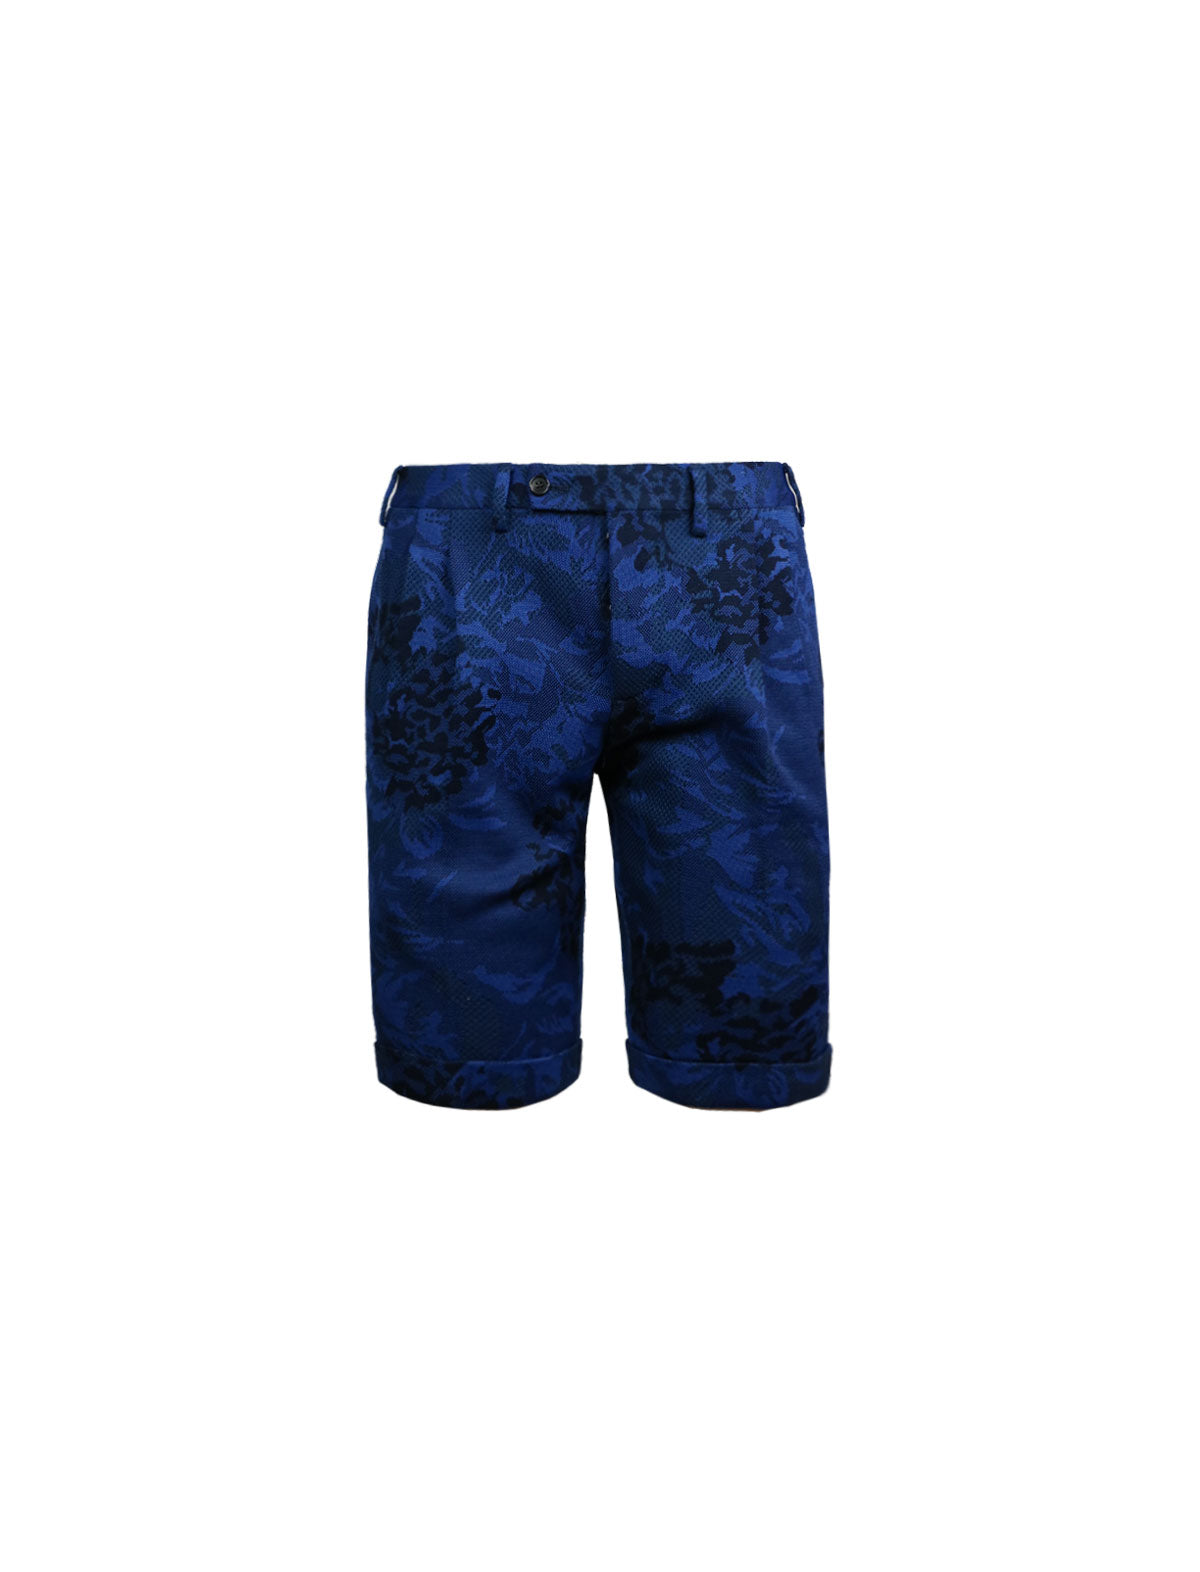 Gabriele Pasini Floral Woven Shorts in Cobalt Blue